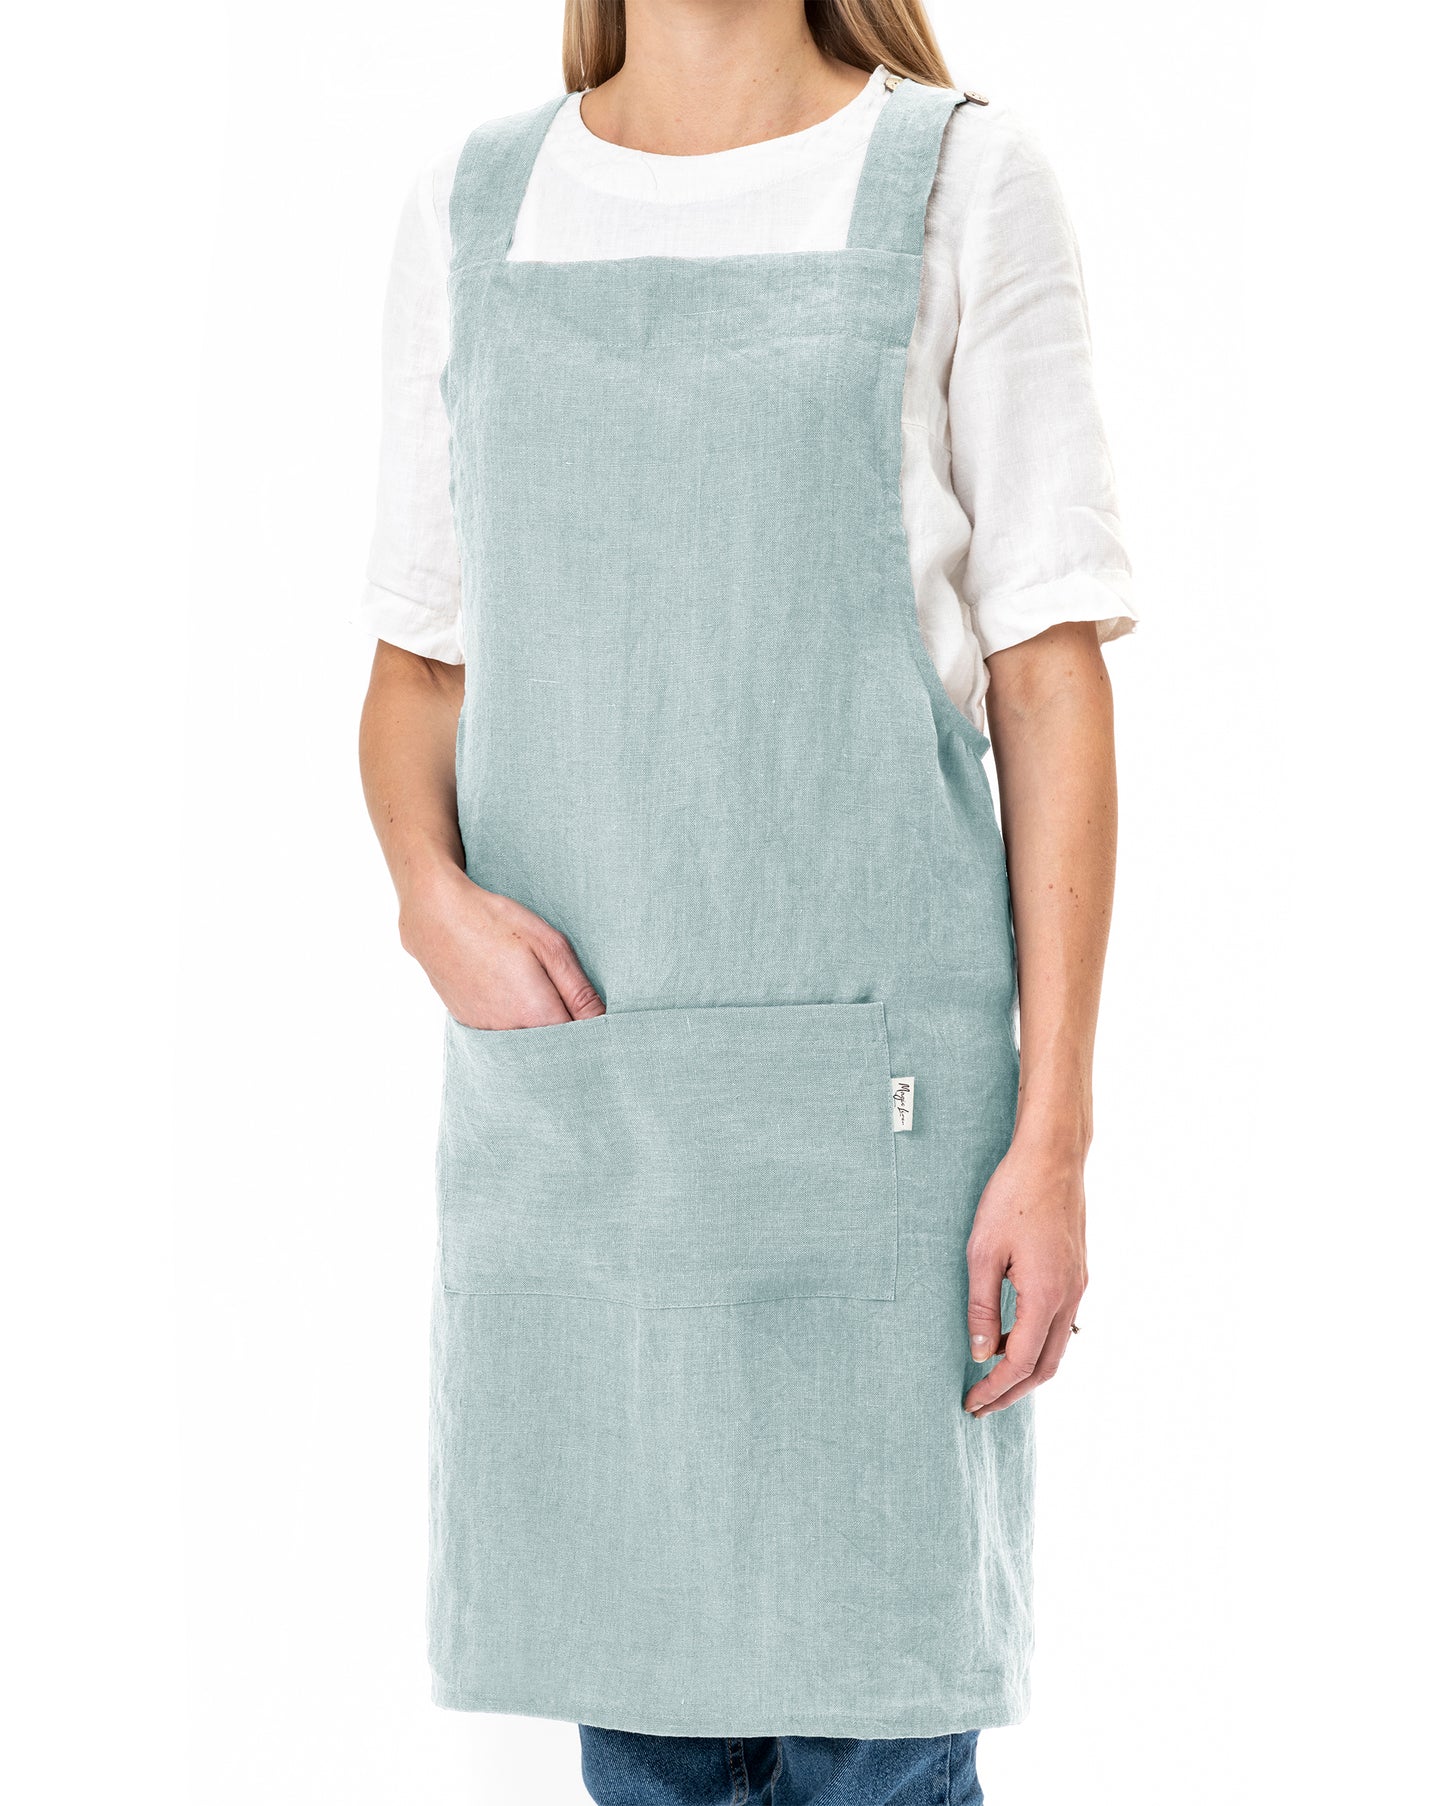 Pinafore cross-back linen apron in Dusty blue - MagicLinen